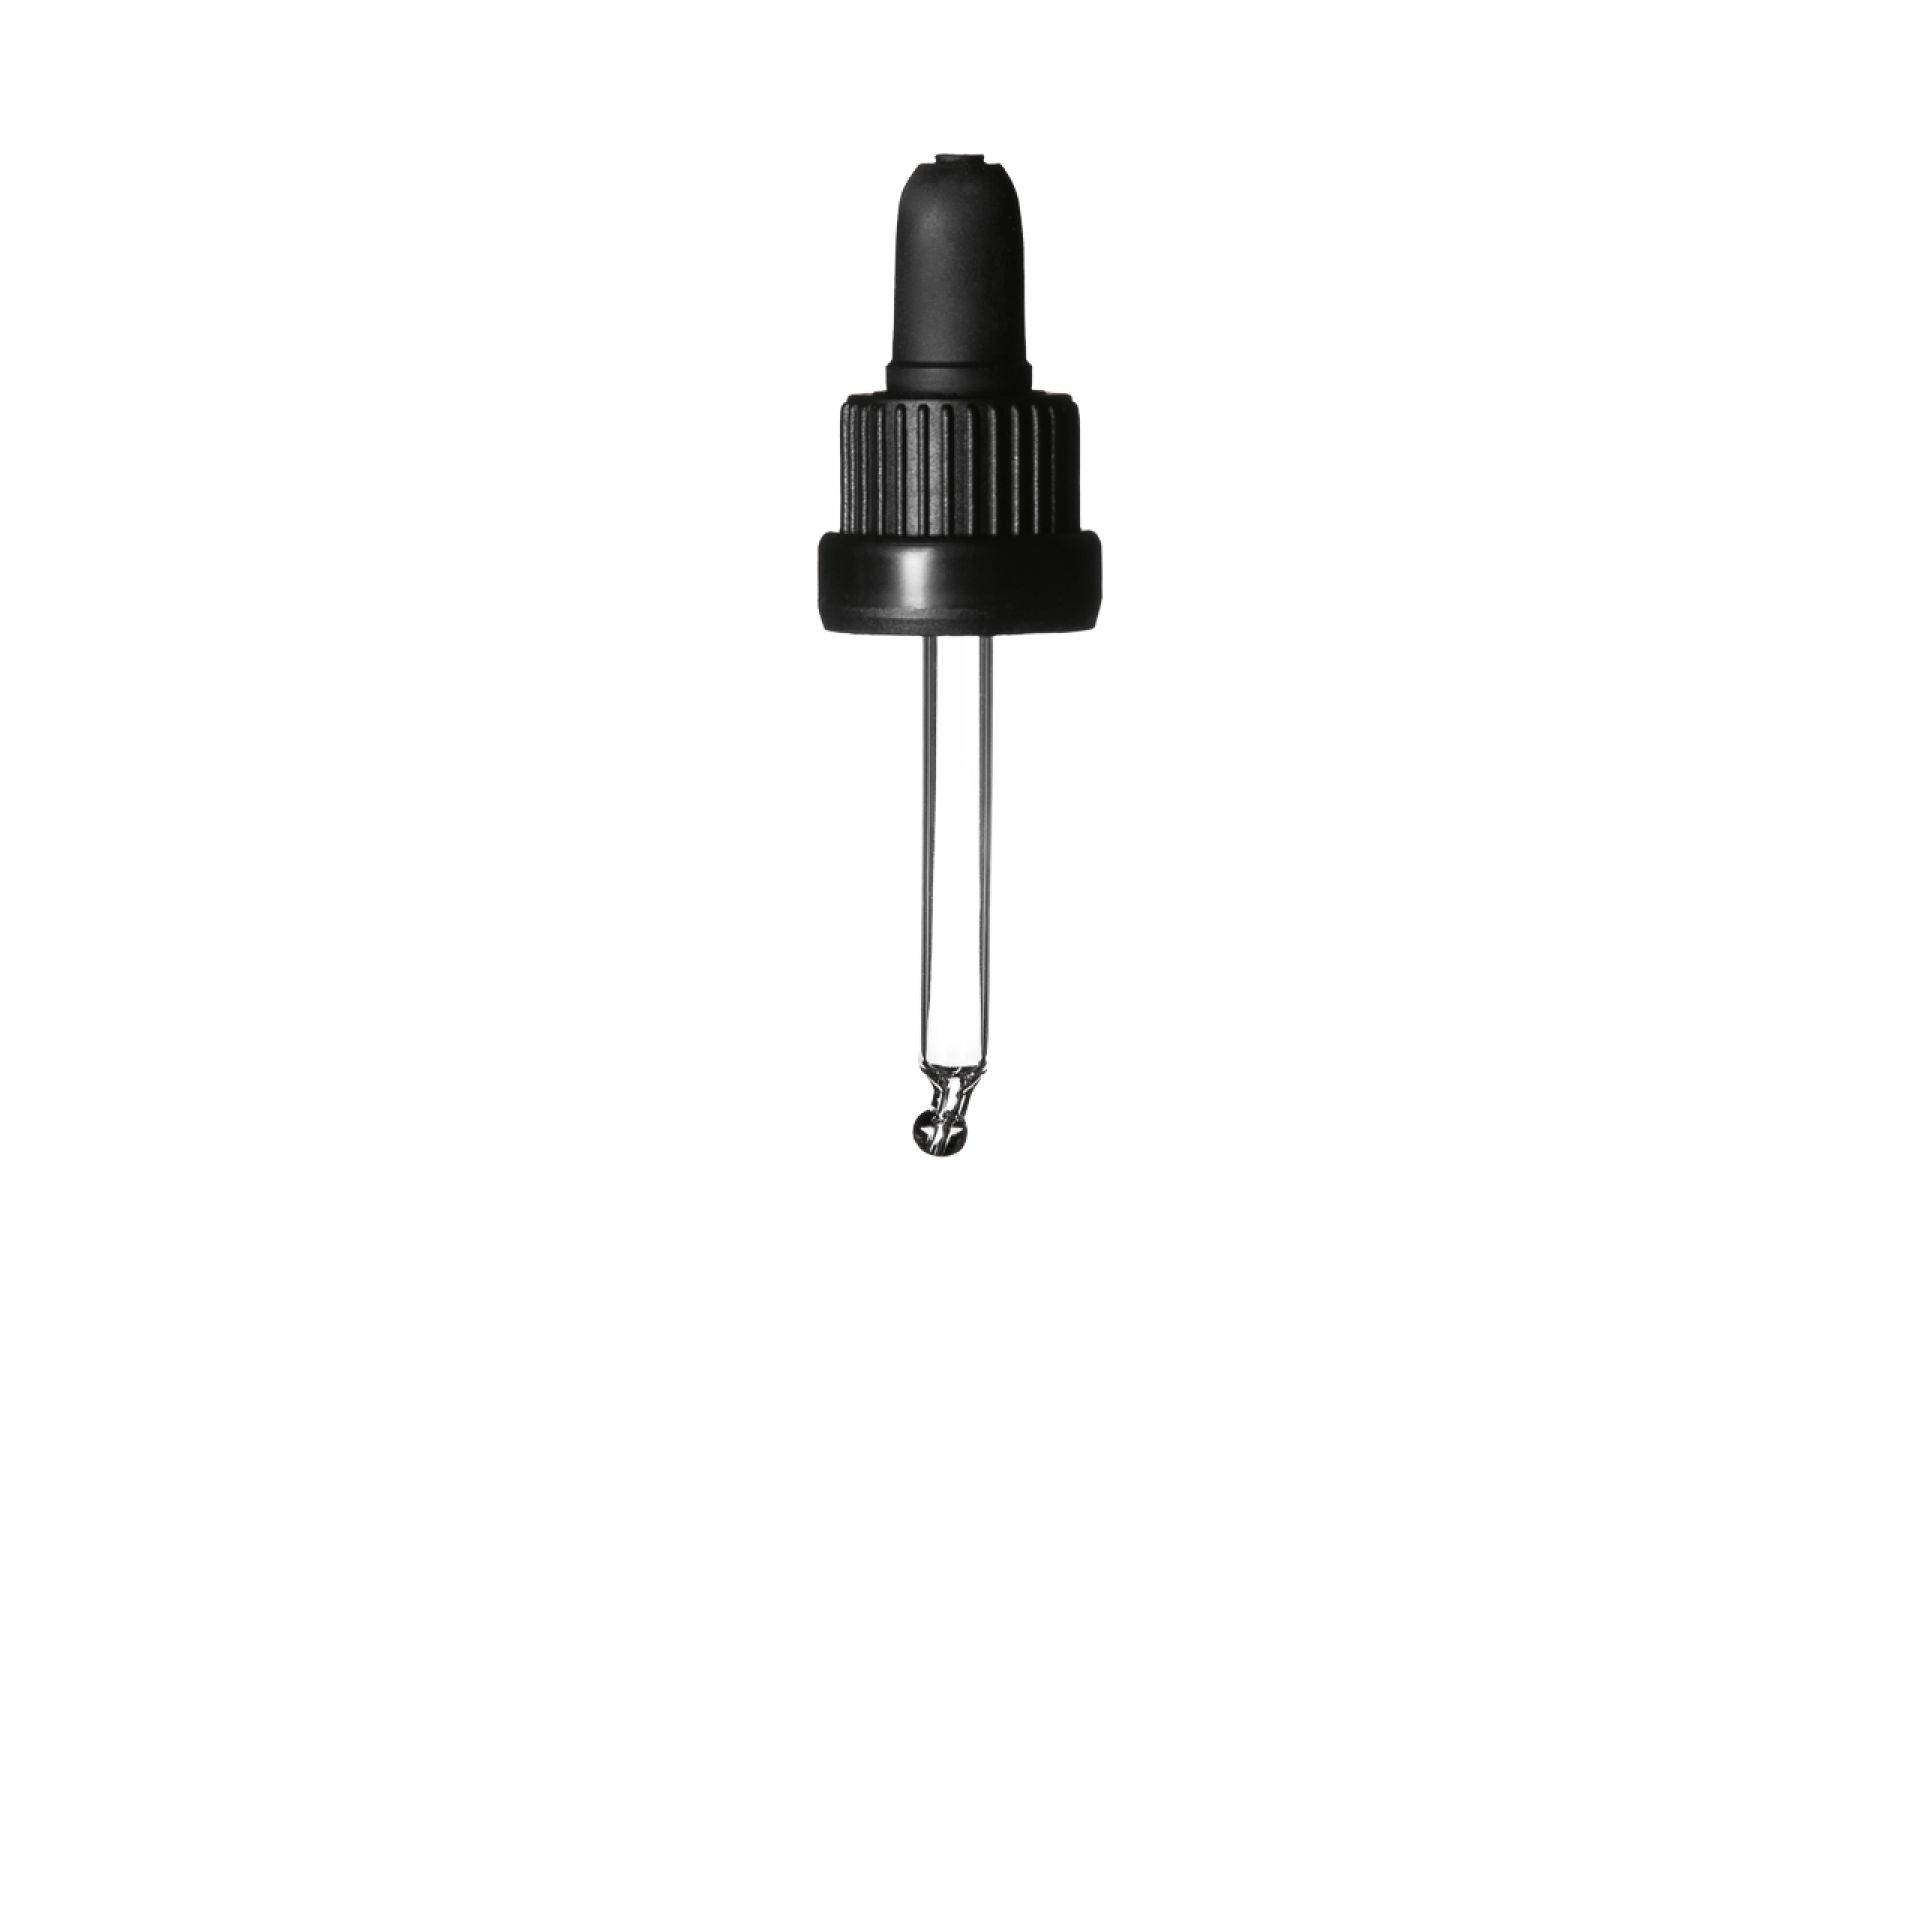 Pipette tamper evident DIN18, III, black, ribbed, bulb TPE, dose 0.7ml, bent ball tip (Orion 15)